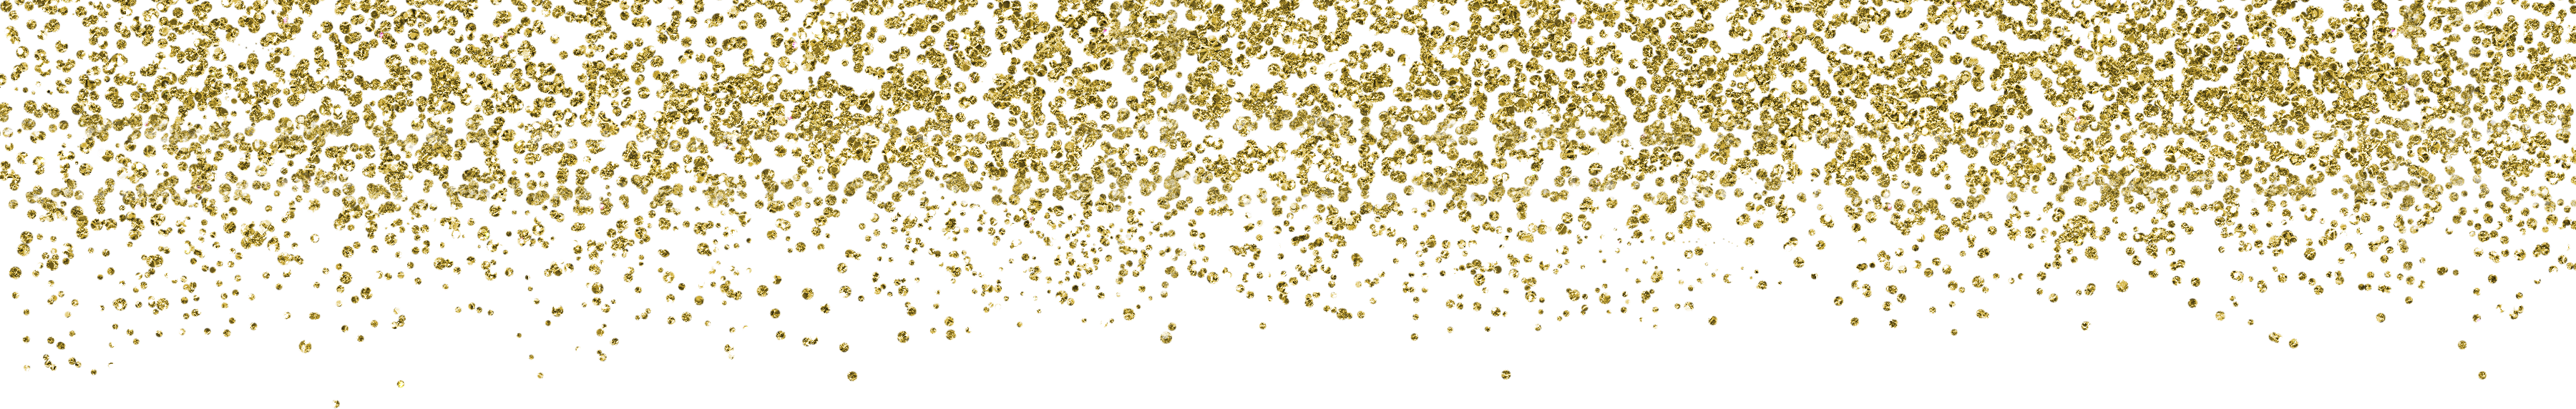 Glitter الذهب التألق PNG صورة عالية الجودة